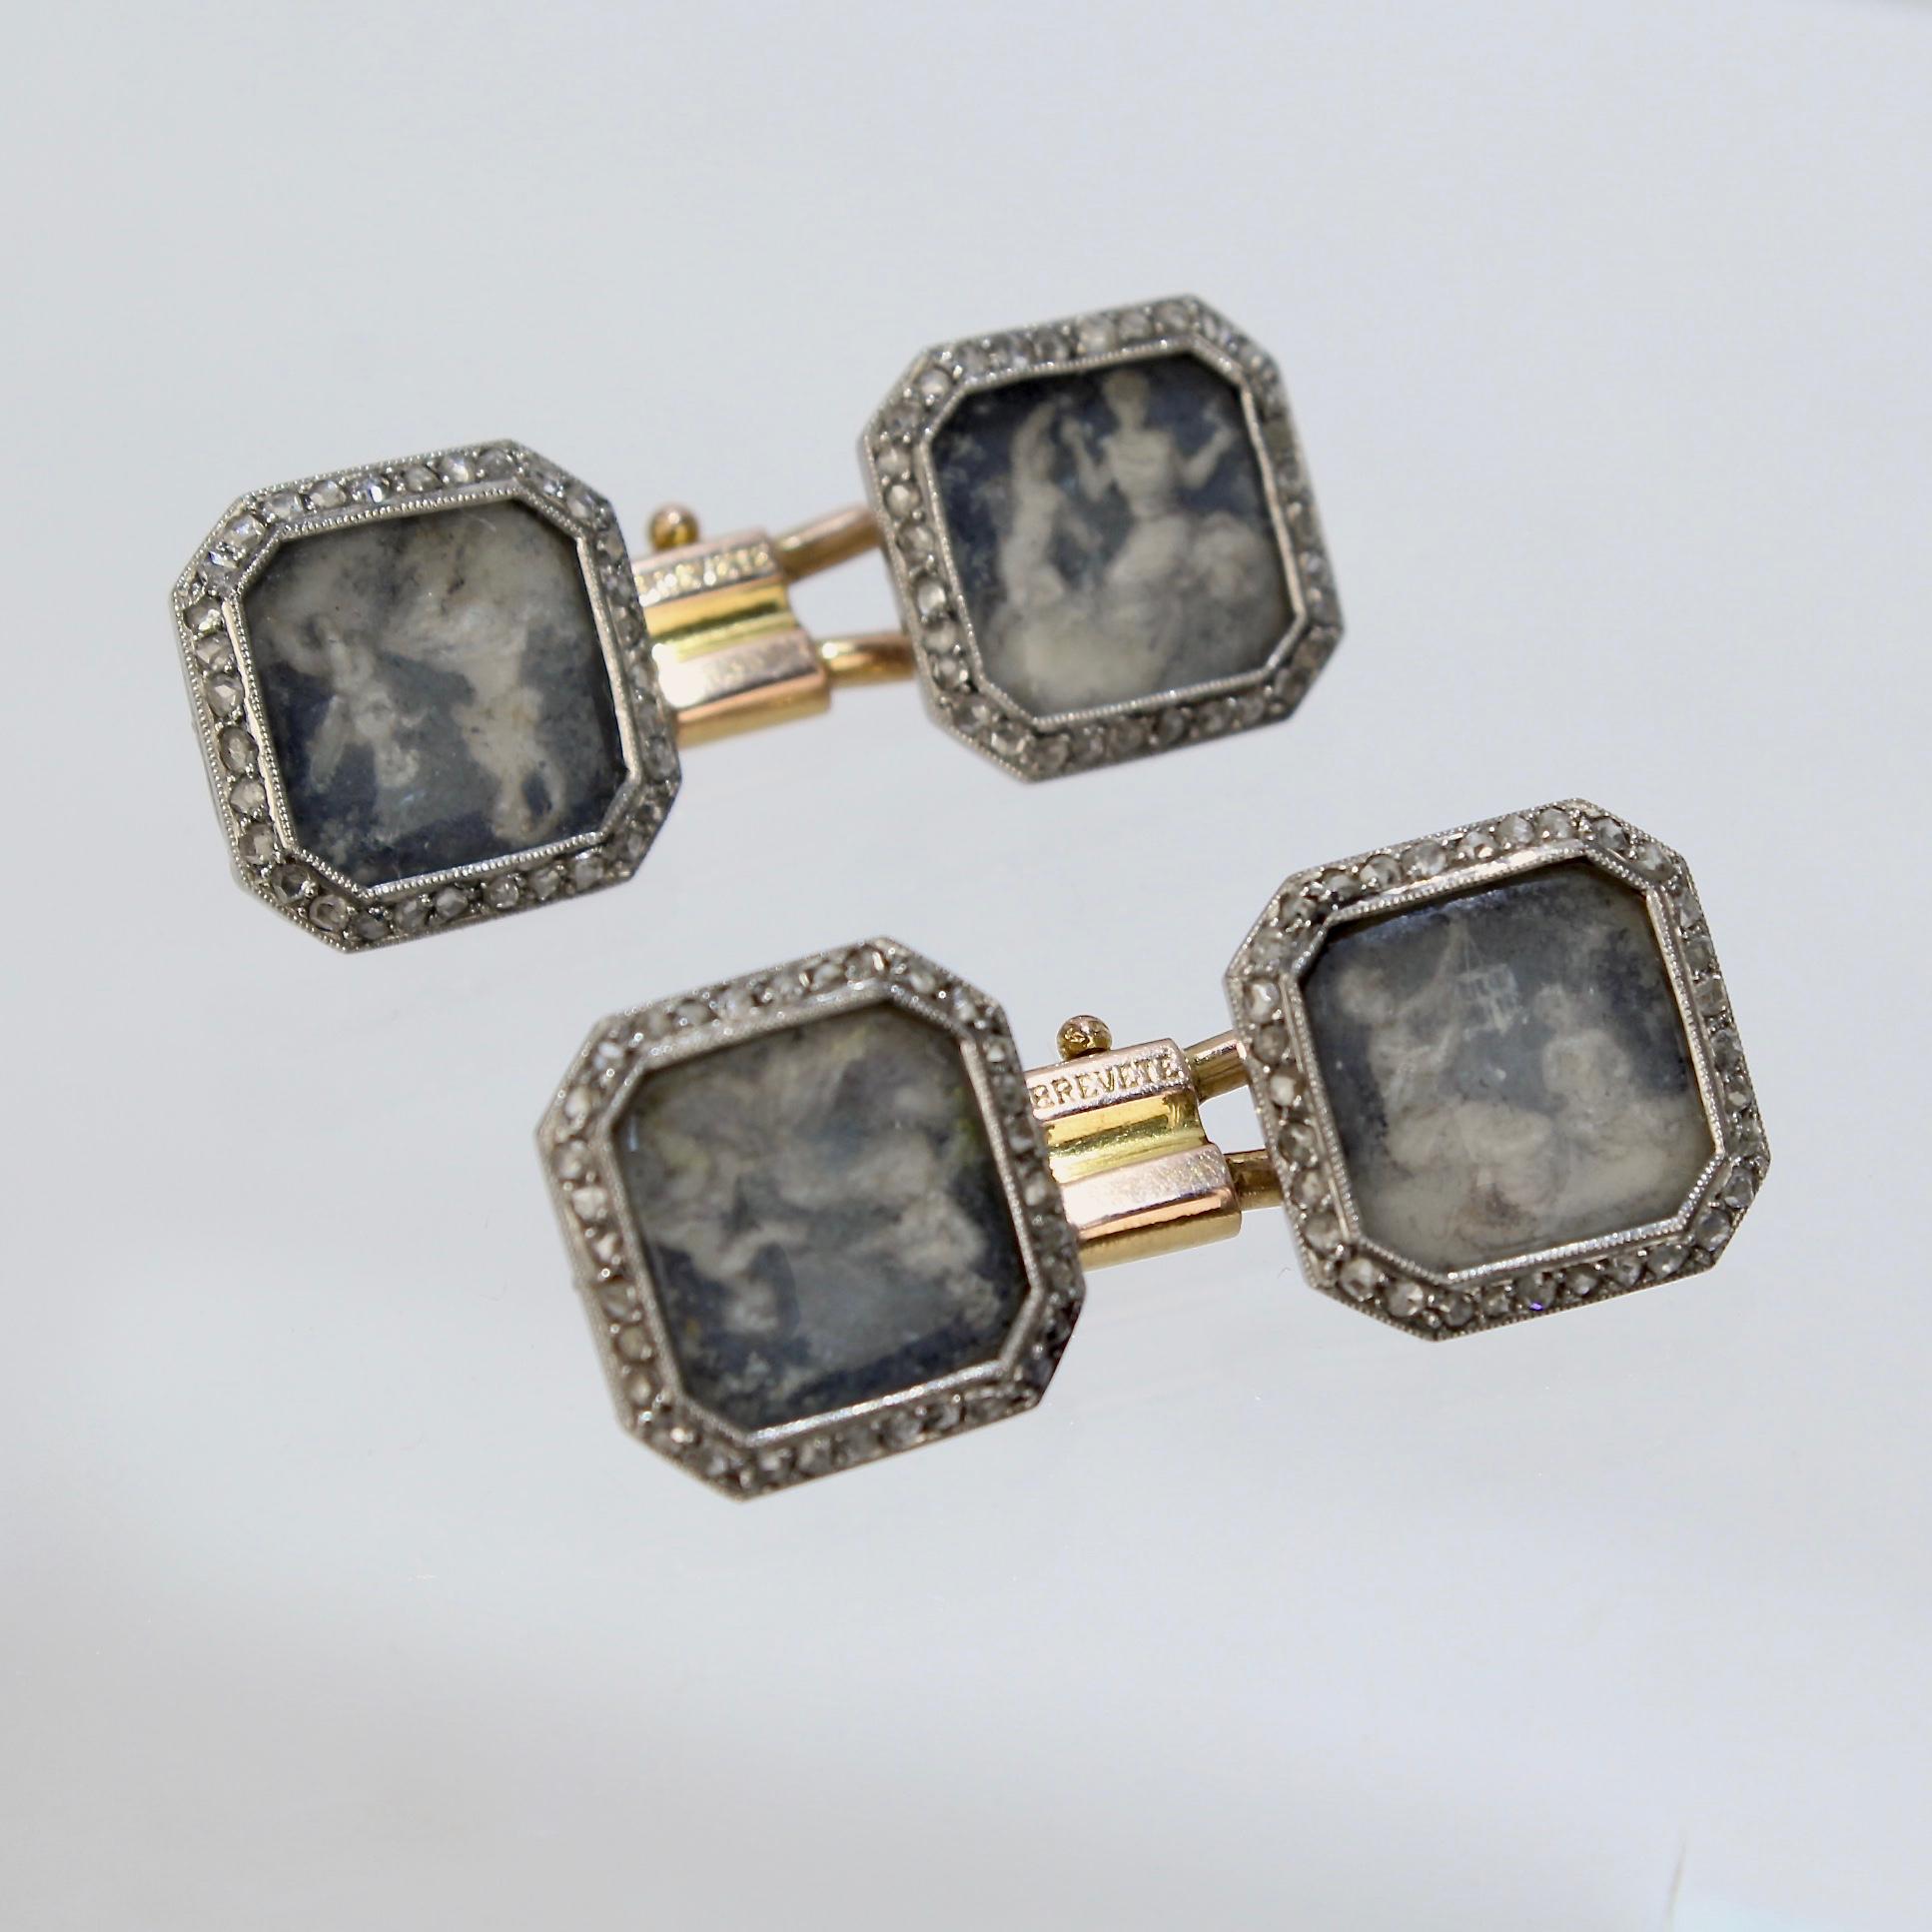 Belle Époque Antique Boucheron Platinum Diamond & 18 Karat Gold Cufflinks with Paillet Cameos